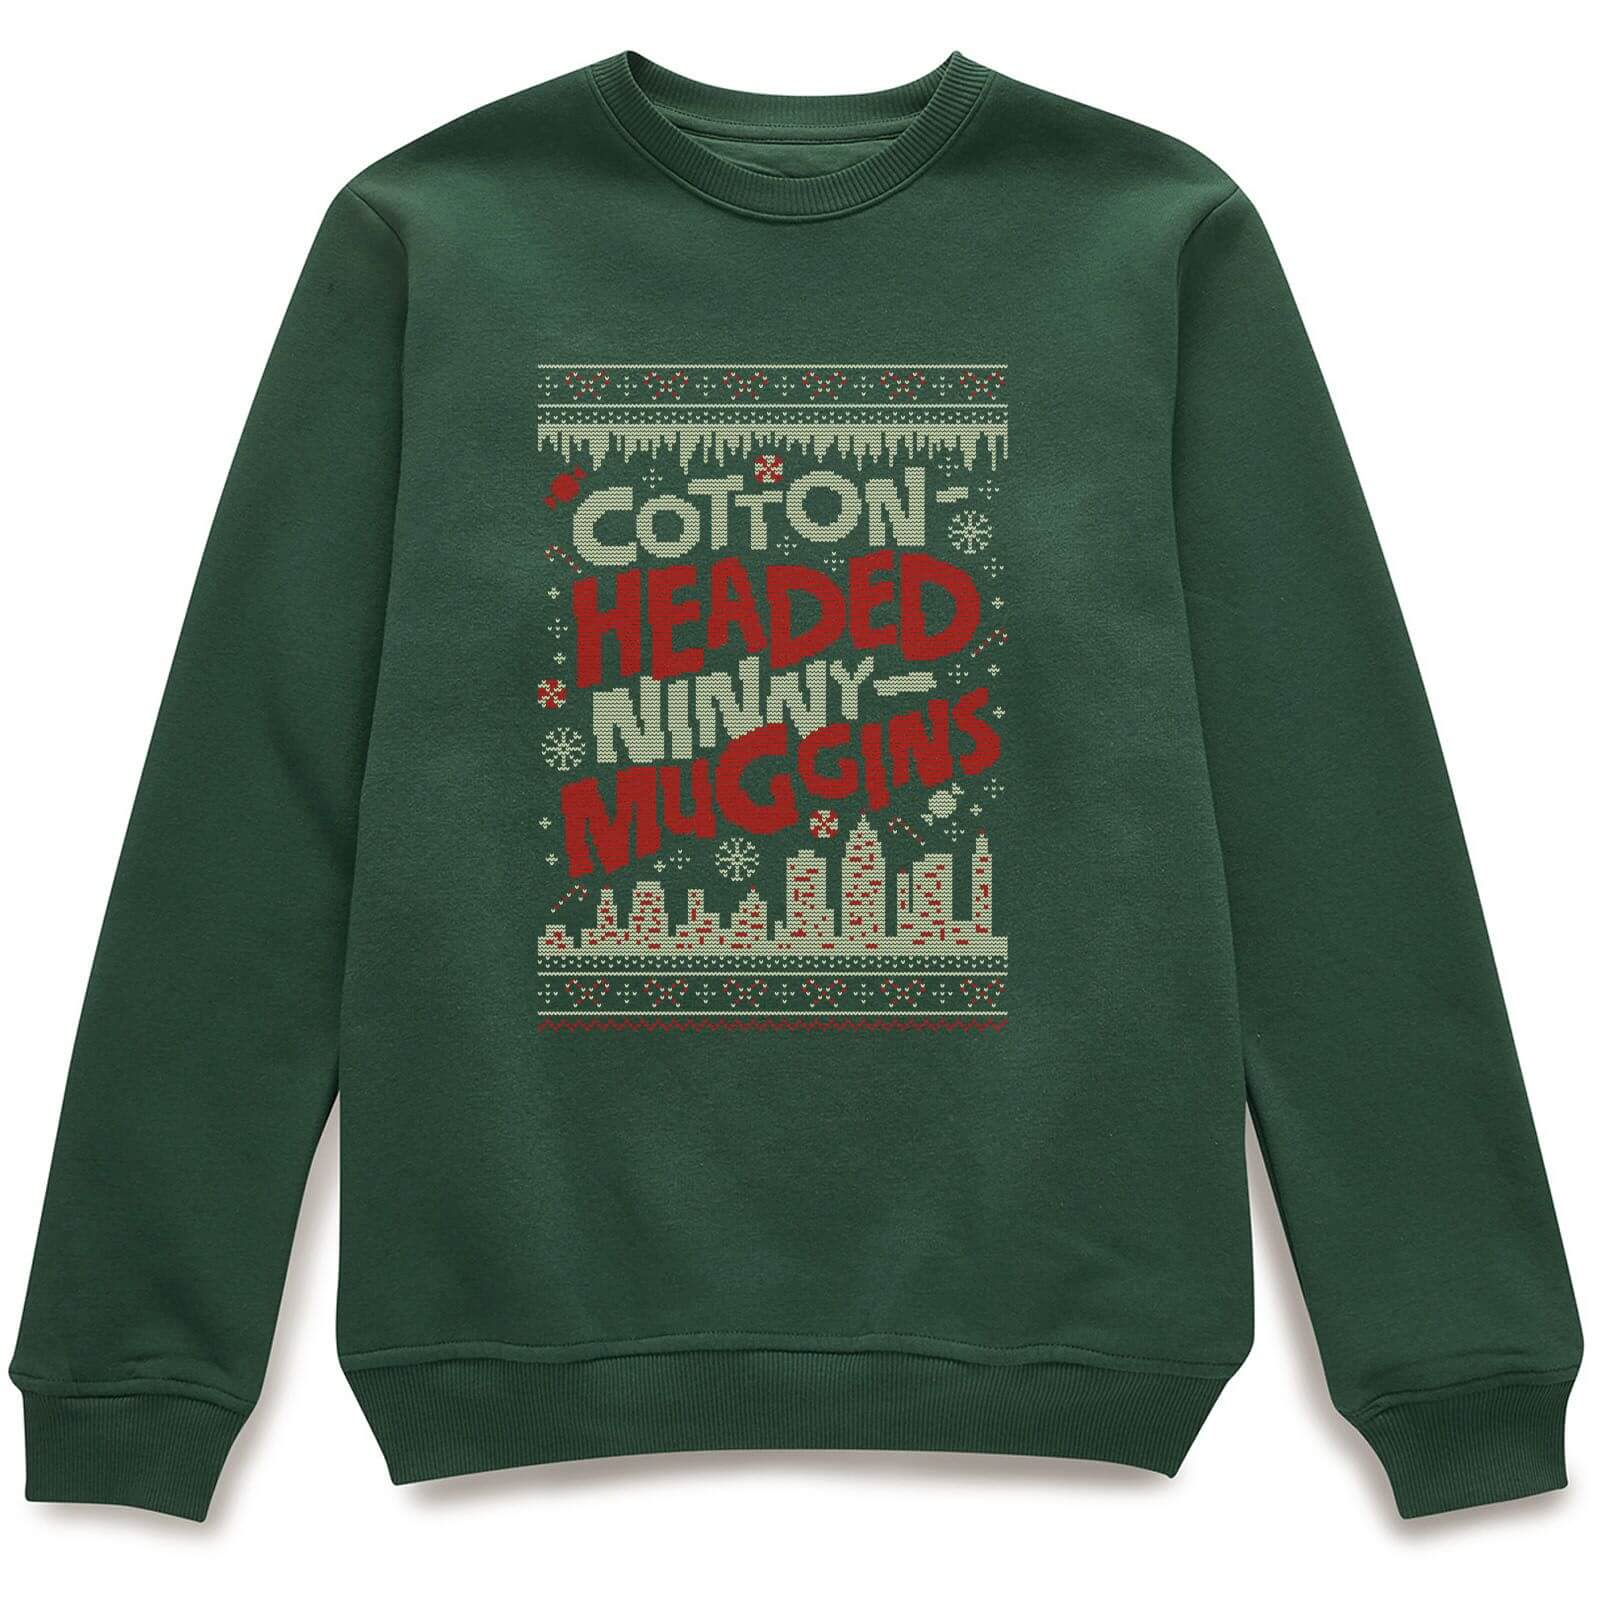 Elf Cotton-Headed-Ninny-Muggins Knit Christmas Jumper - Forest Green - S